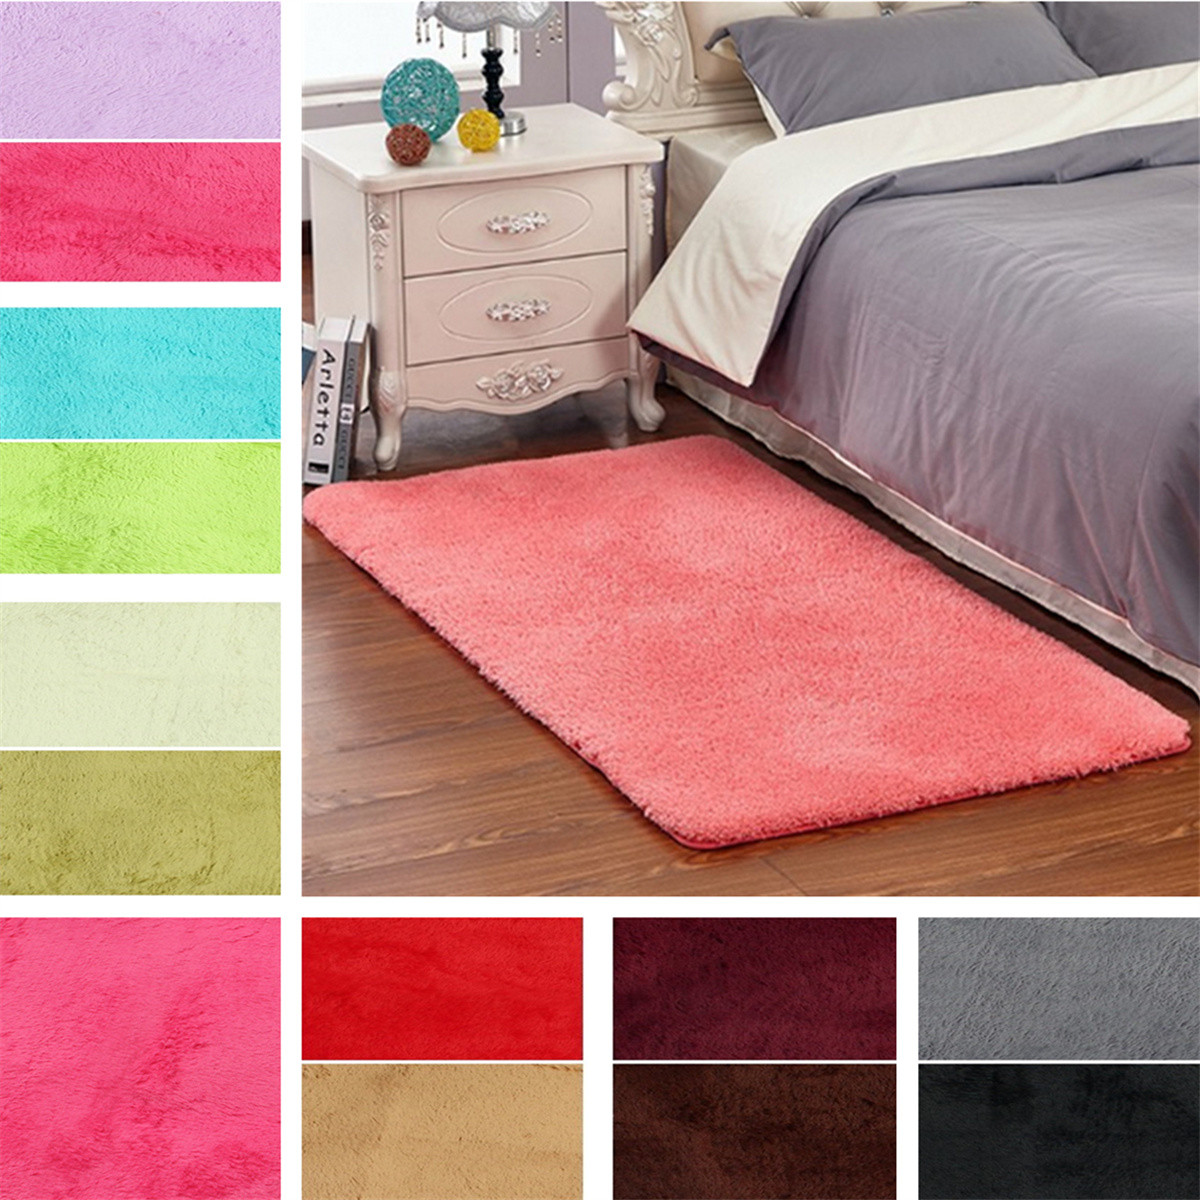 

60 x 120cm Anti-skid Shaggy Fluffy Area Rug Bedroom Carpet Floor Mat Parlor Decor